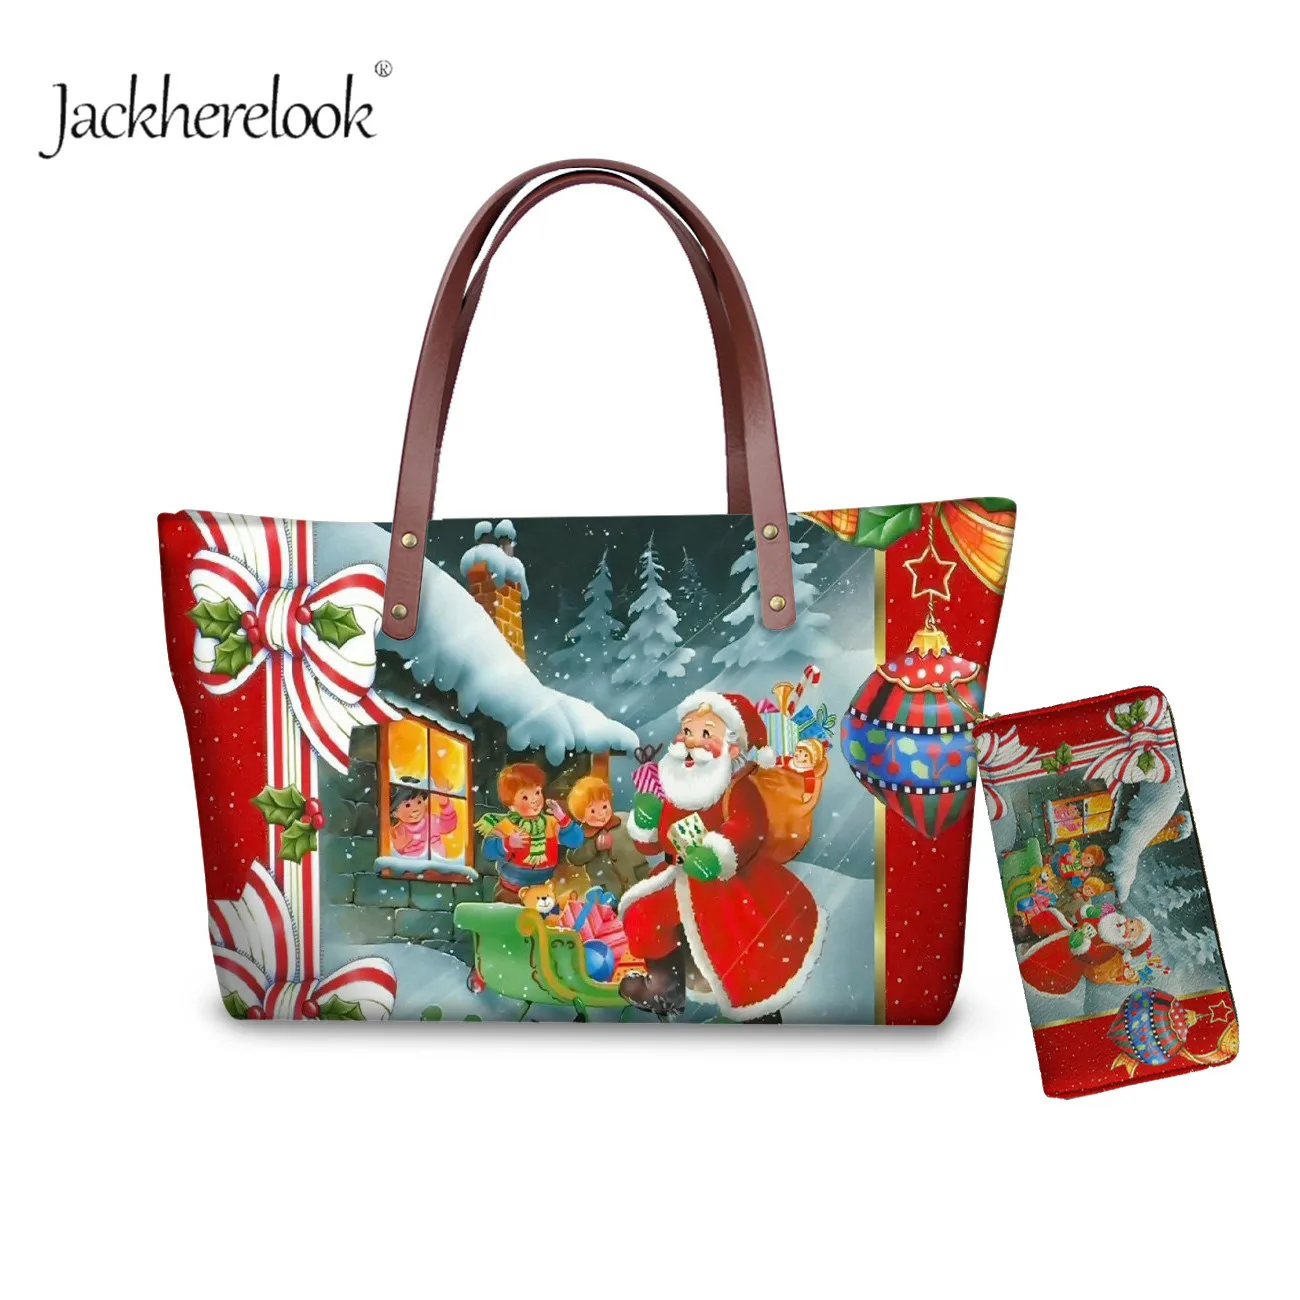 Jackherelook Fashion Christmas Pattern Wallet & Handbag set for Women Santa Claus Design Purse and Tote Ladies Leather Hand Bag